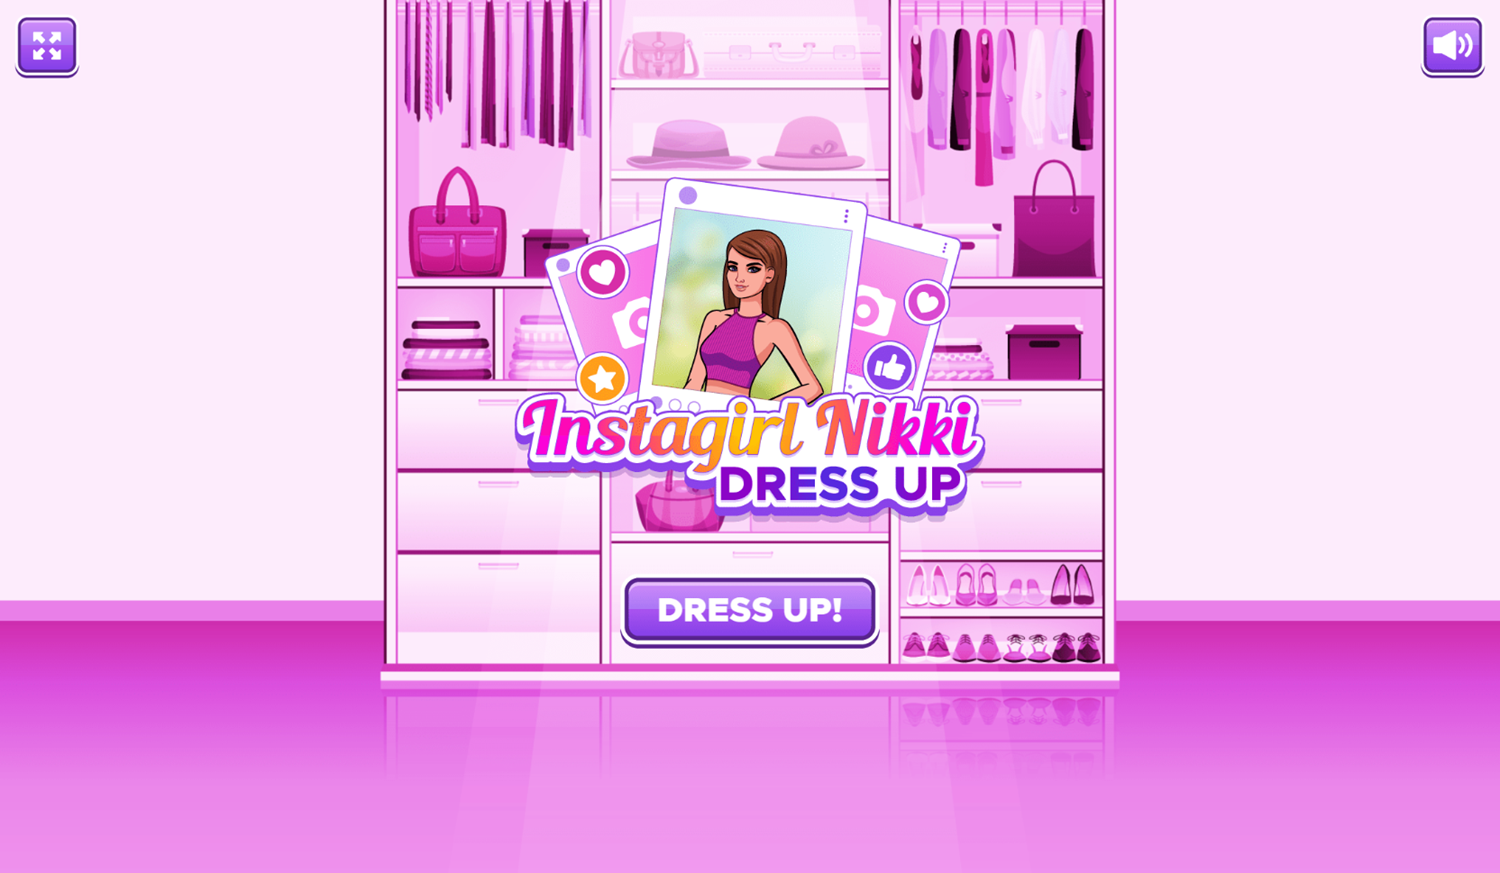 Instagirl Nikki Dress Up Game Welcome Screen Screenshot.